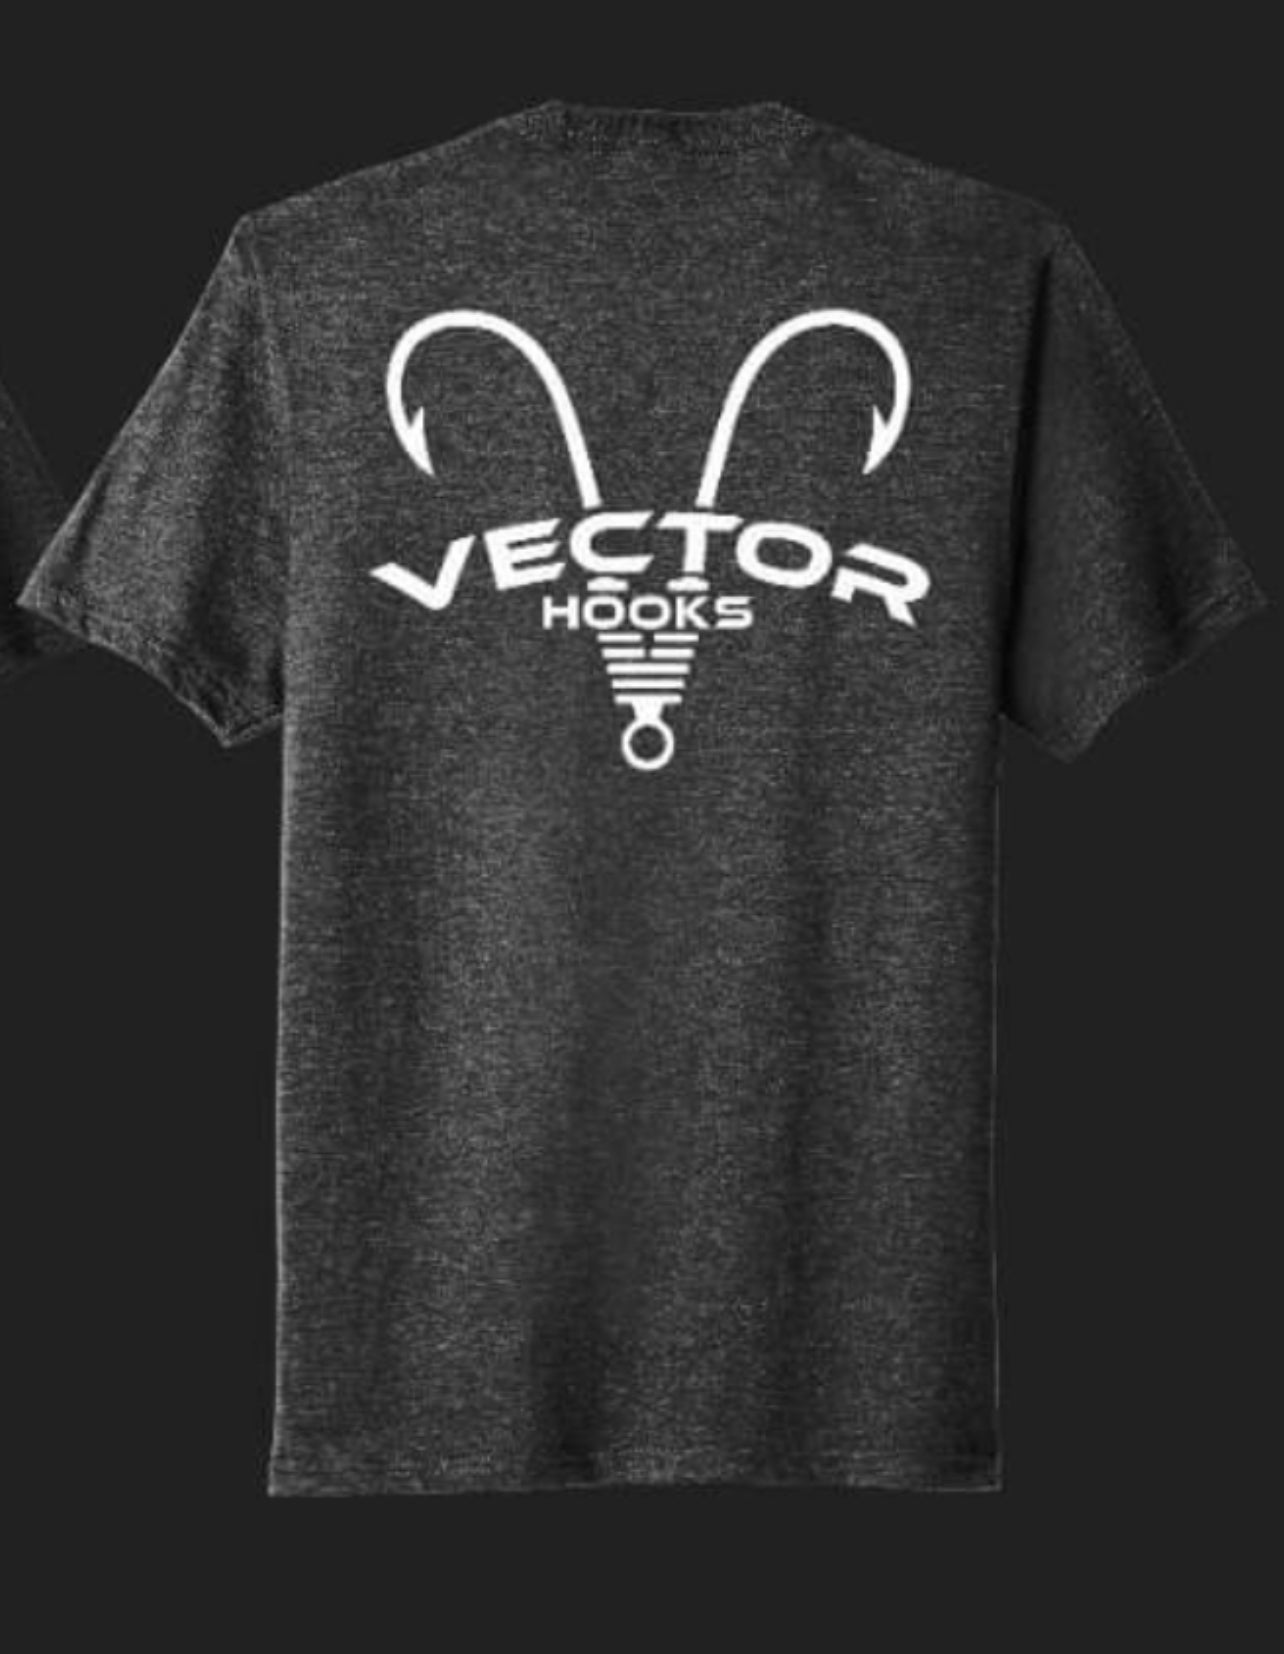 Vector Hooks T Shirts